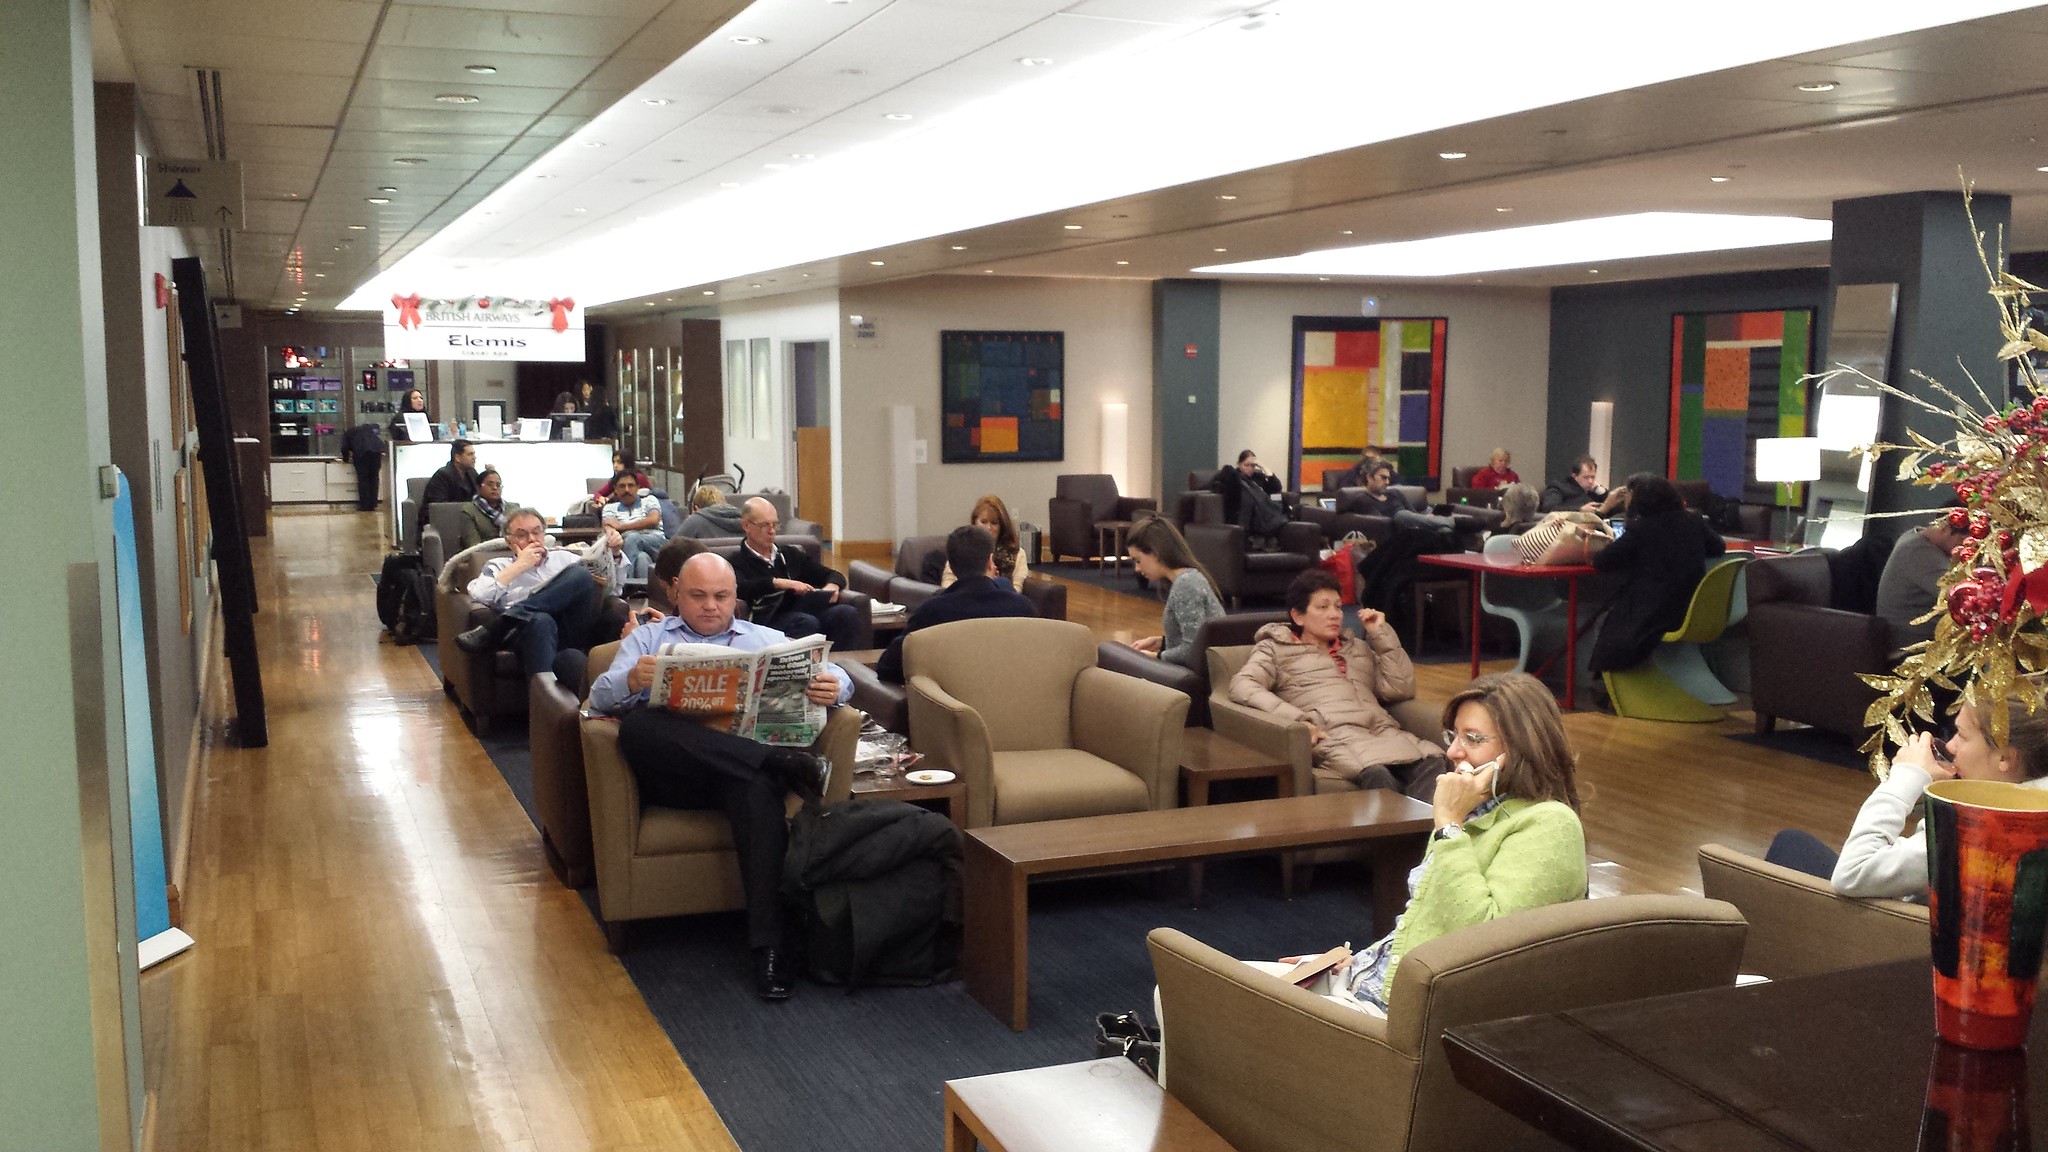 The BA business class lounge at New York JFK